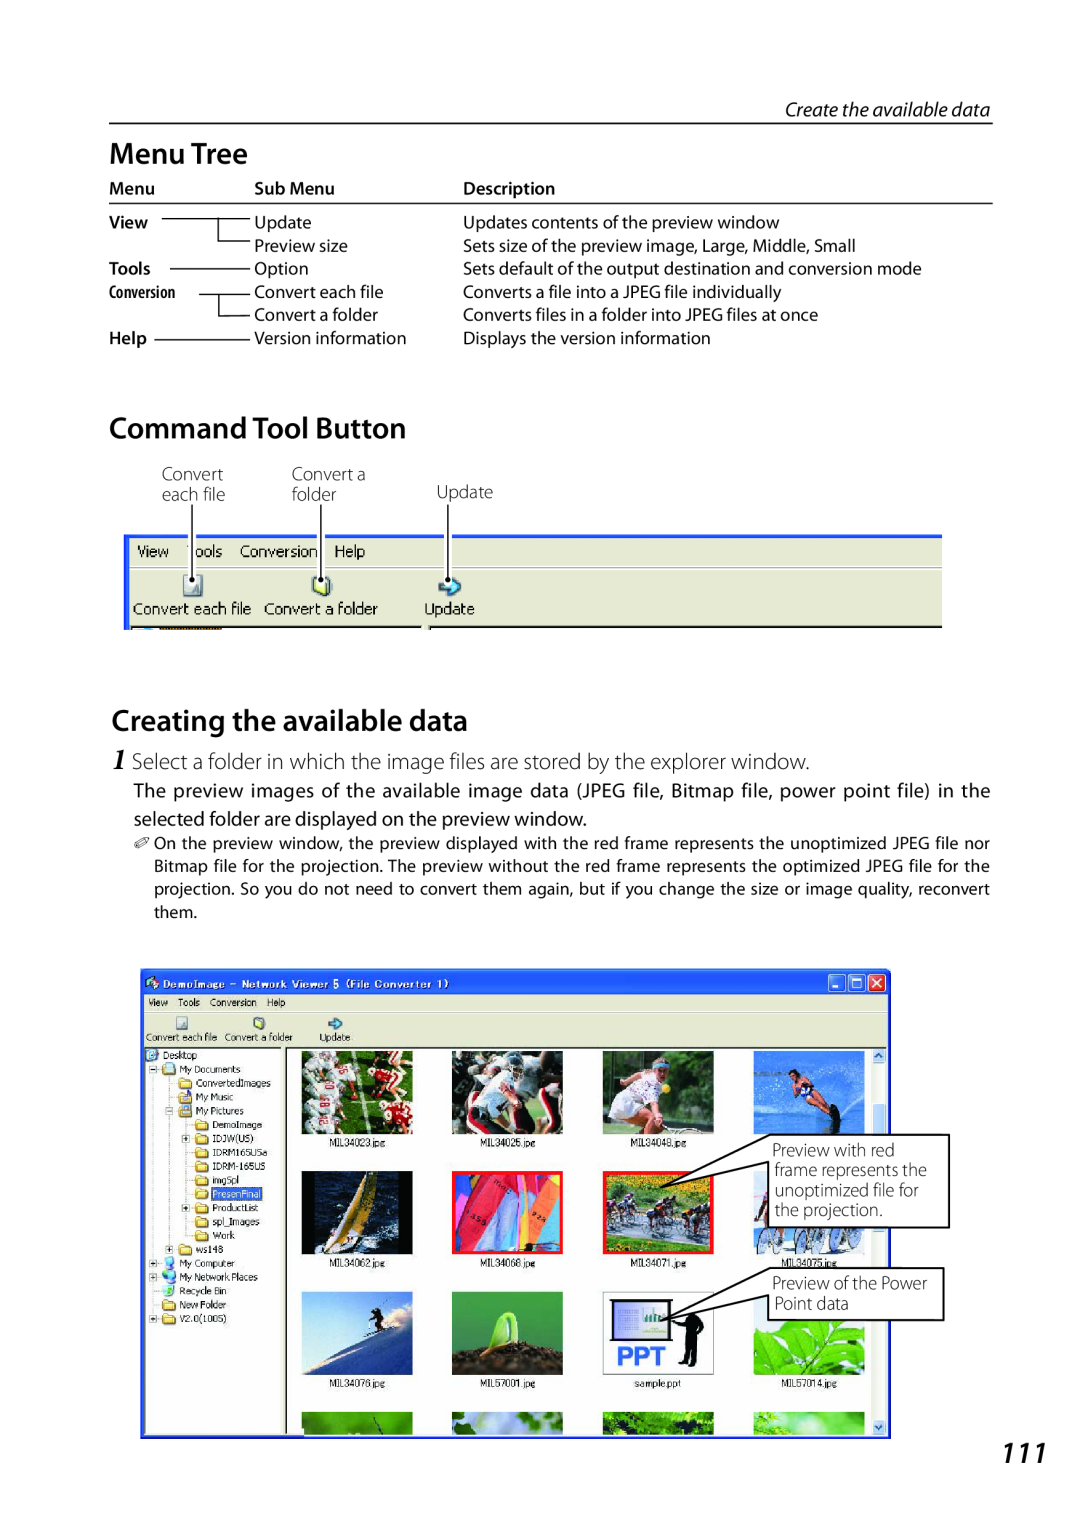 Sanyo QXXAVC922---P Creating the available data, Command Tool Button, Menu Tree, Sub Menu, Description, View, Tools, Help 